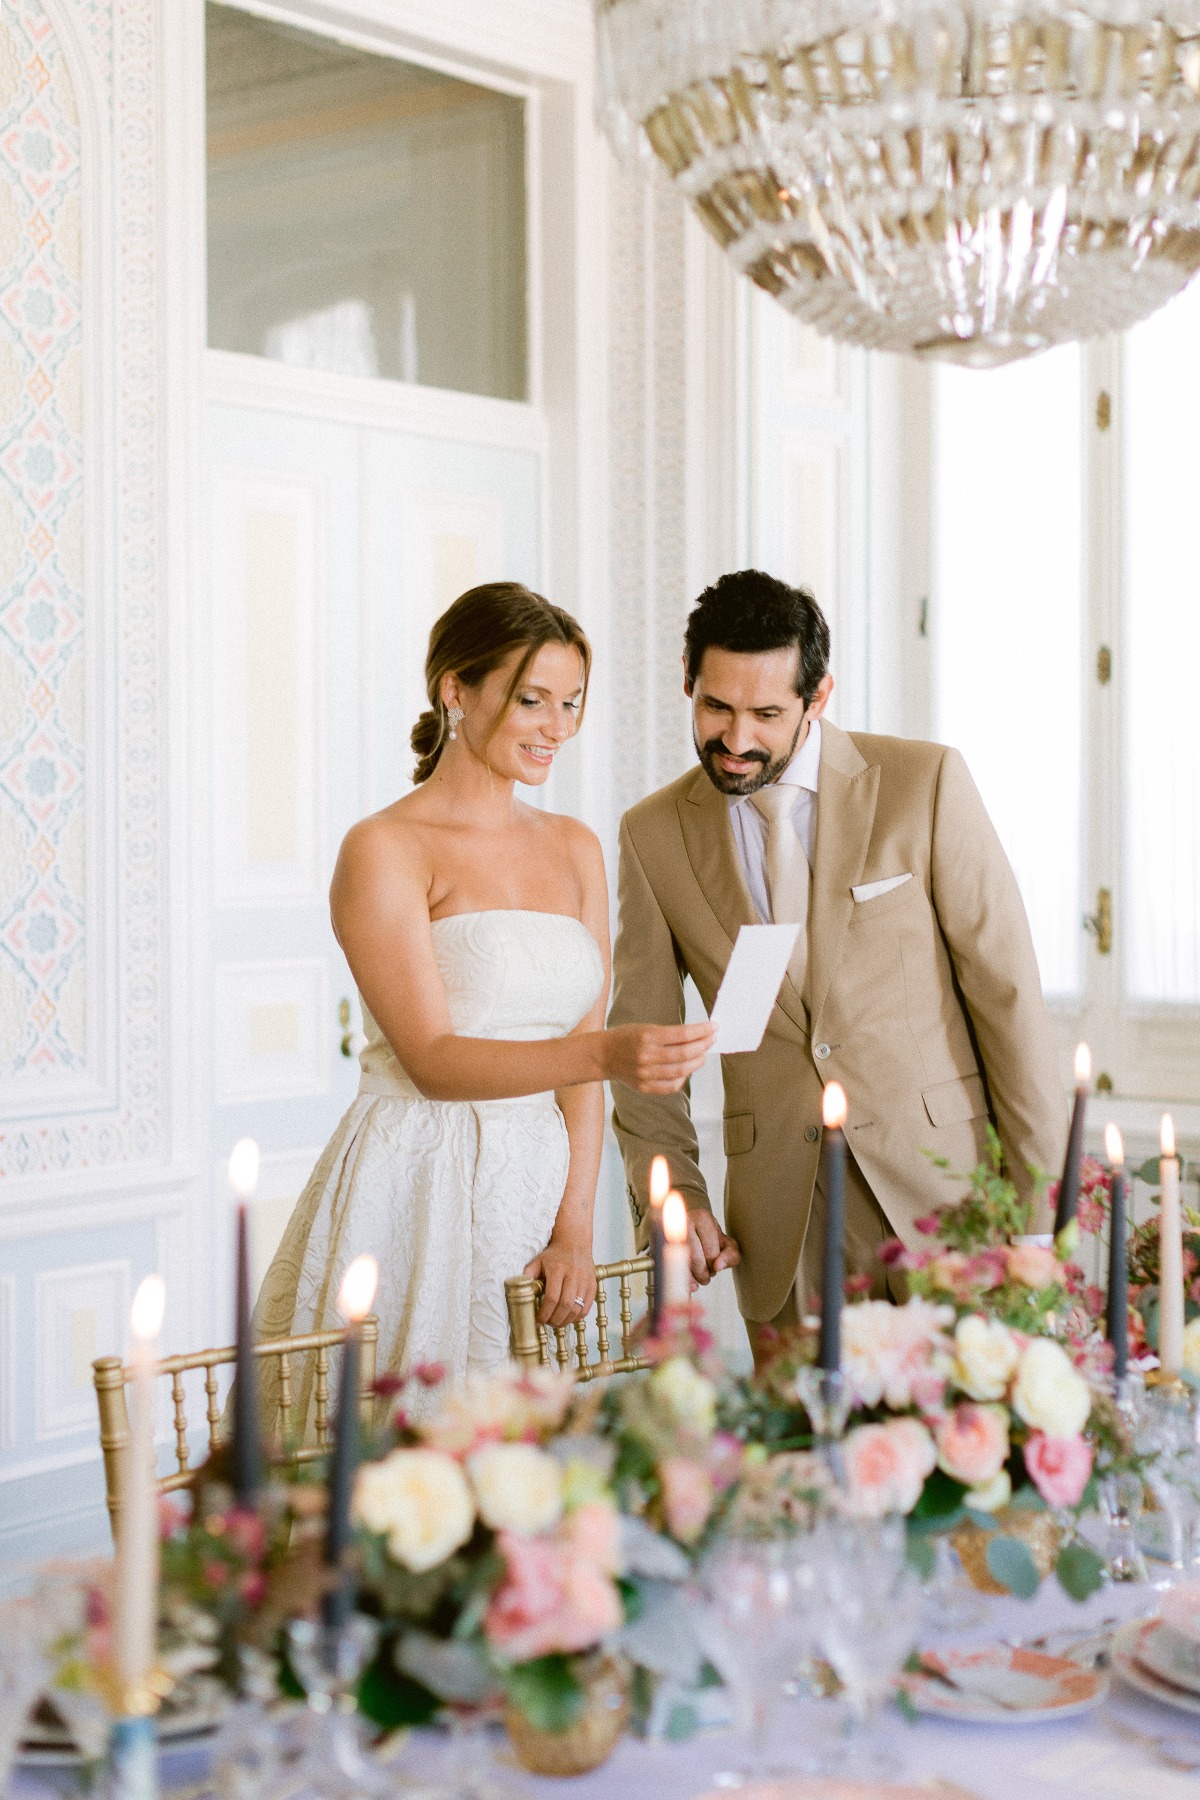 elegant and refined wedding reception